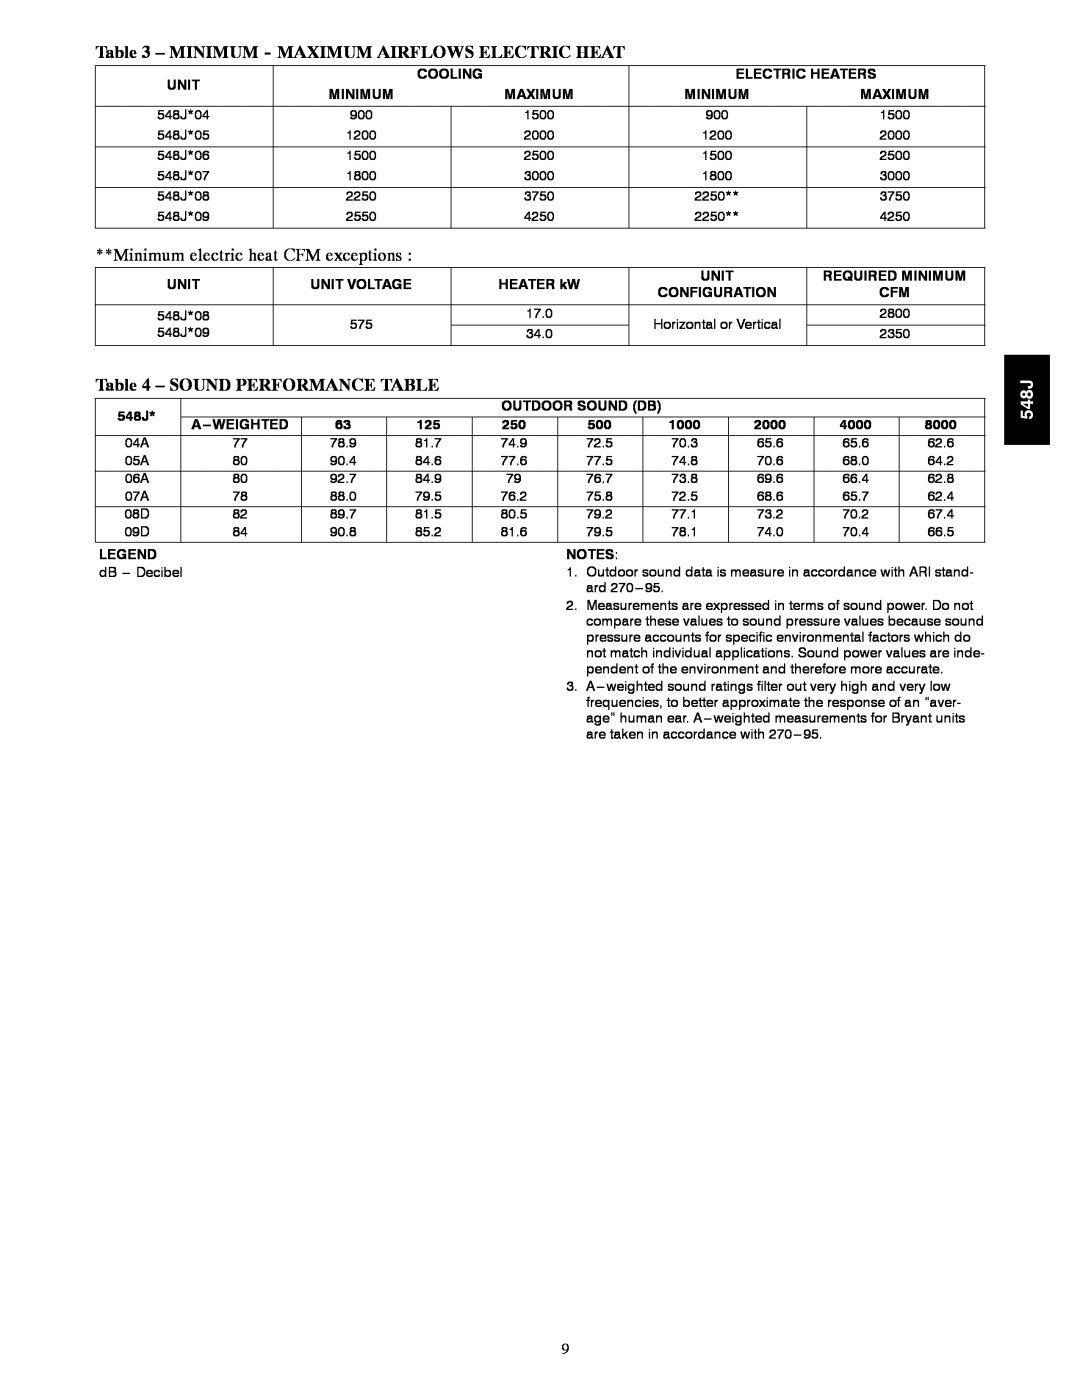 Bryant 548J manual Minimum electric heat CFM exceptions, Sound Performance Table 